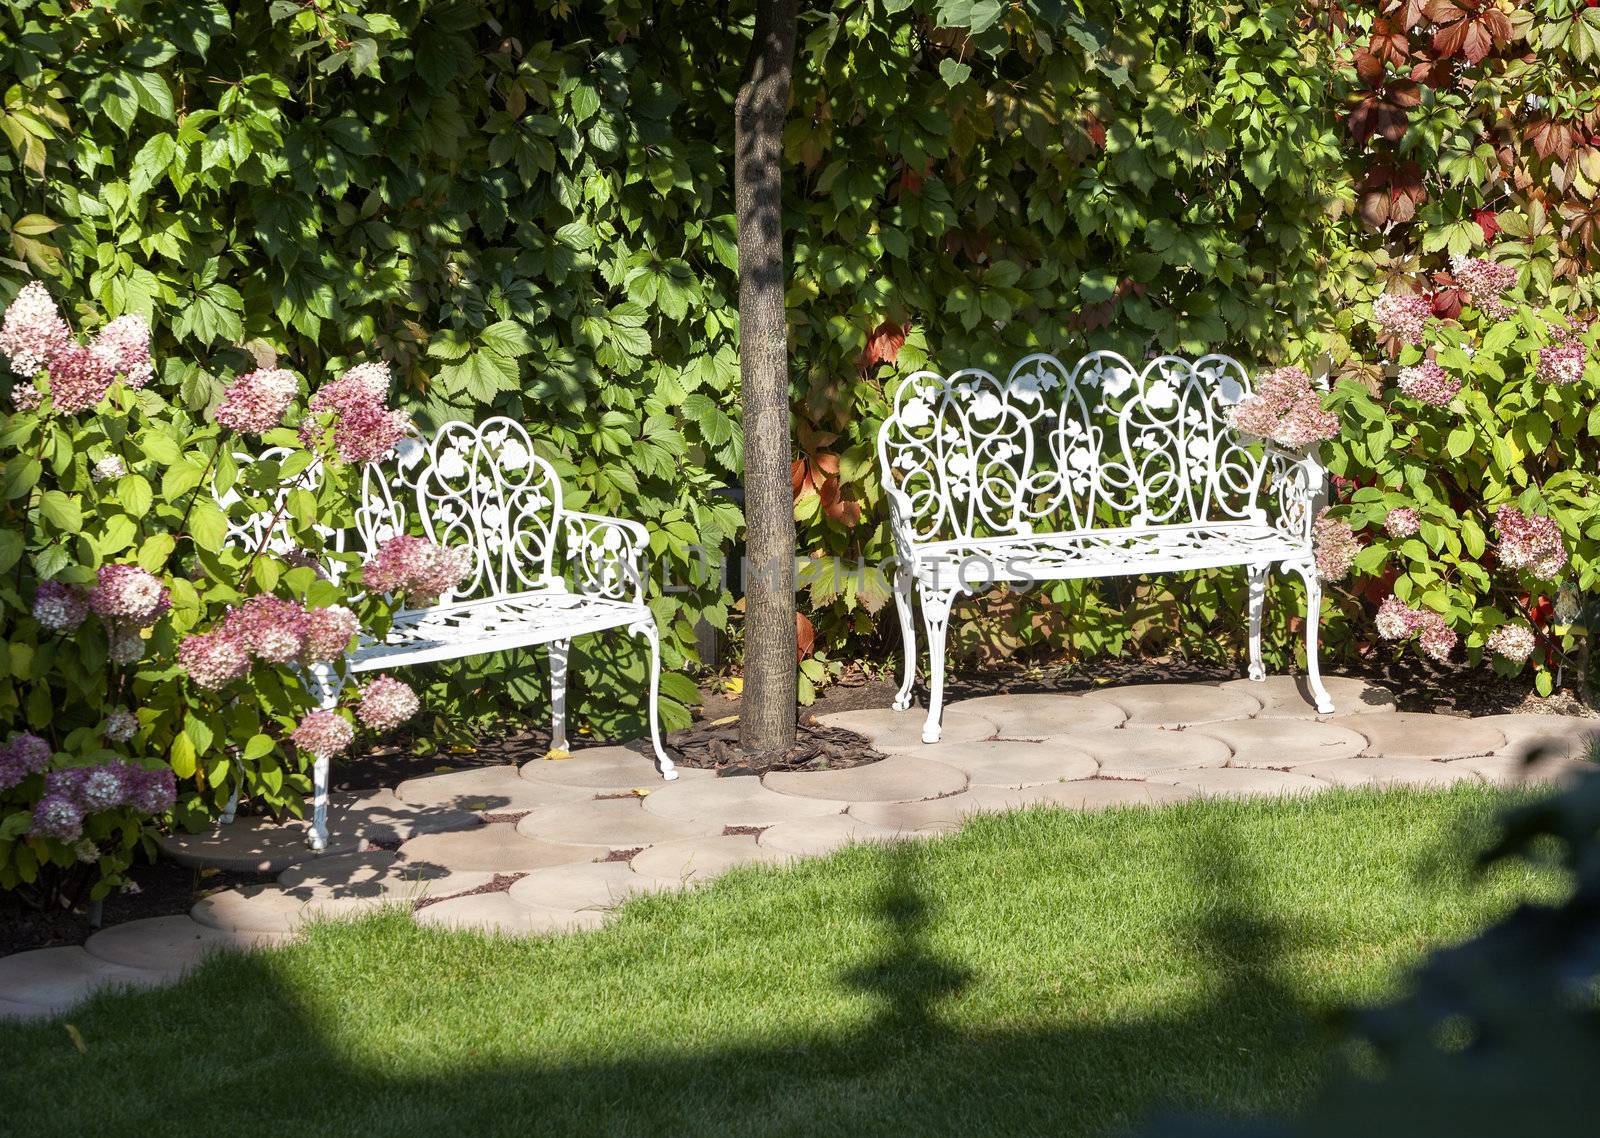 White benches in a summer garden